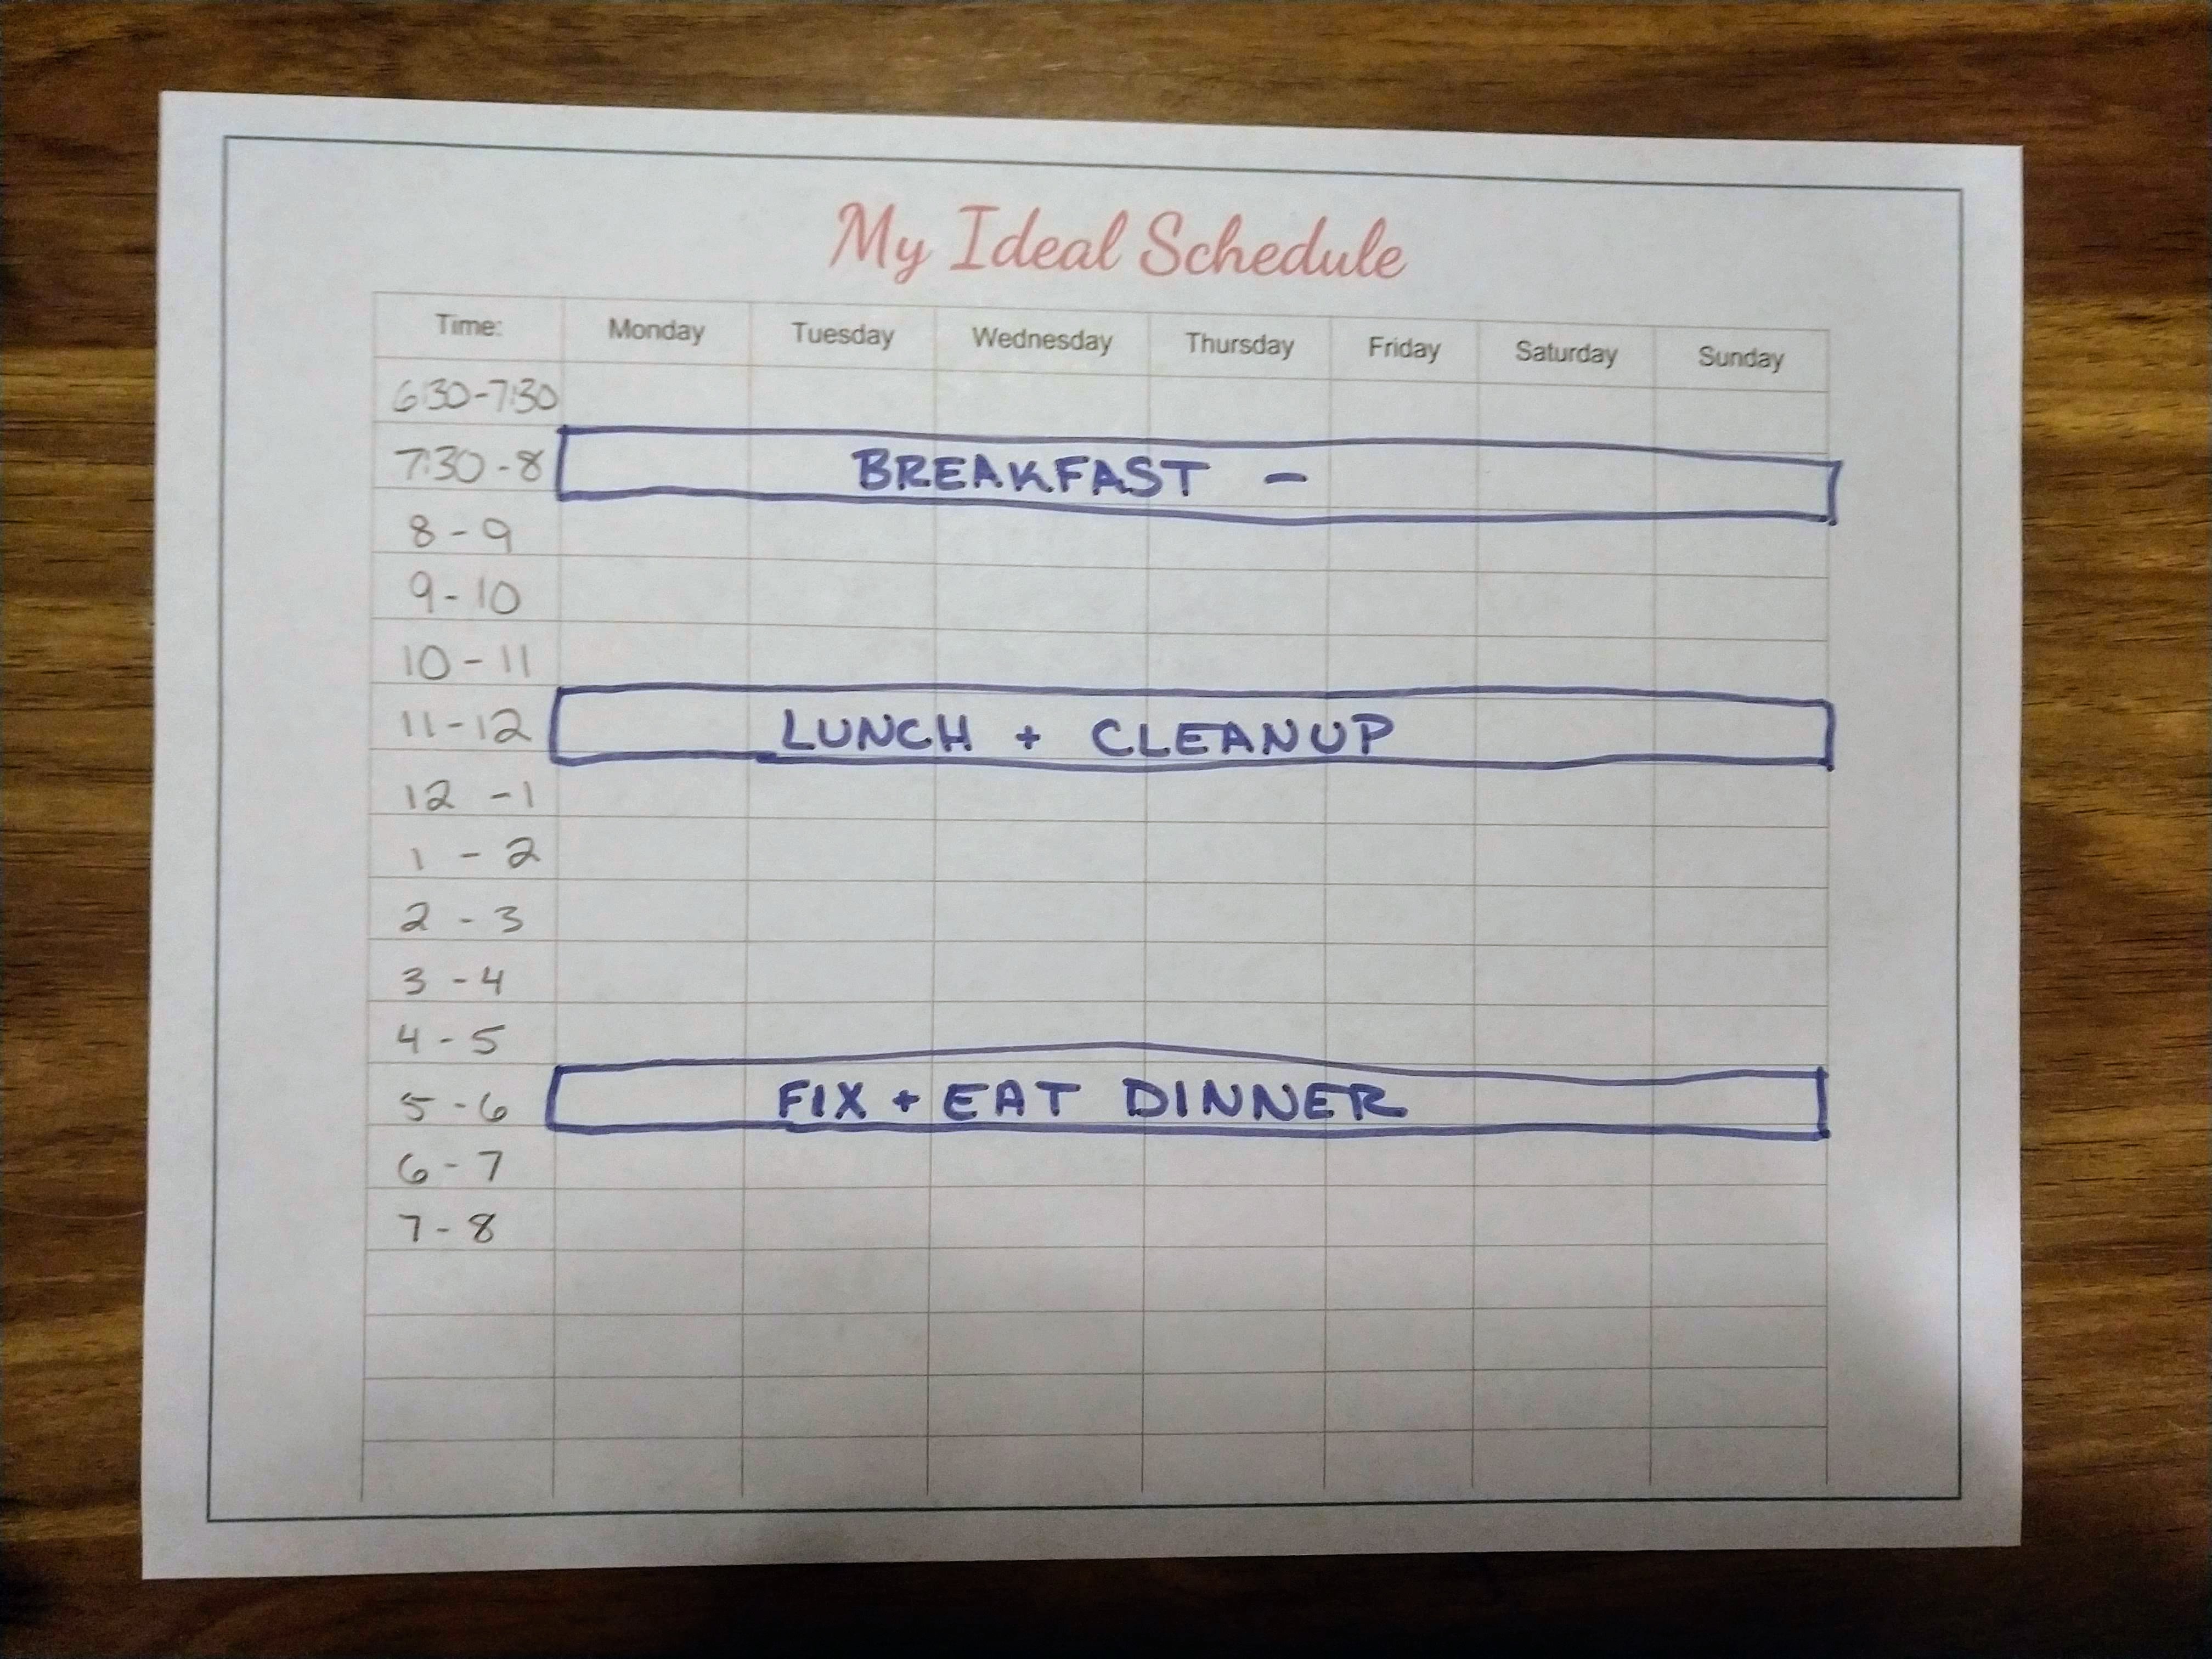 Weekly Schedule Step 1 - Meal Times